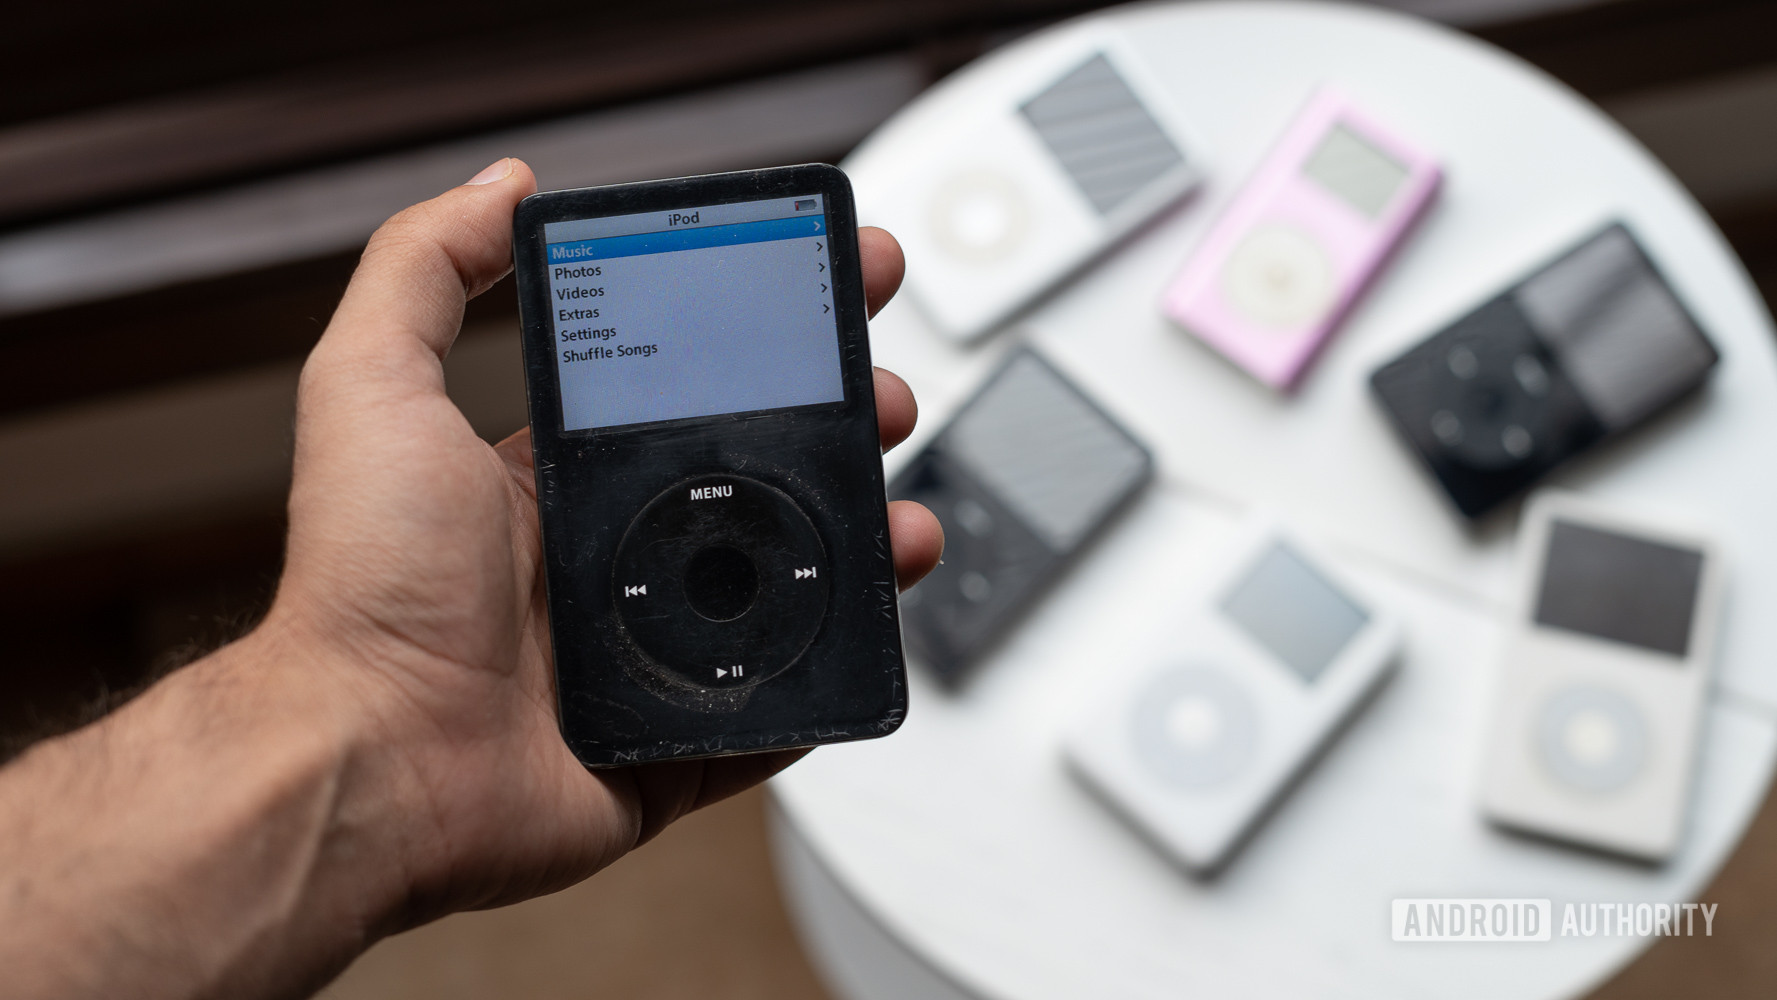 Apple iPod Classic in hand